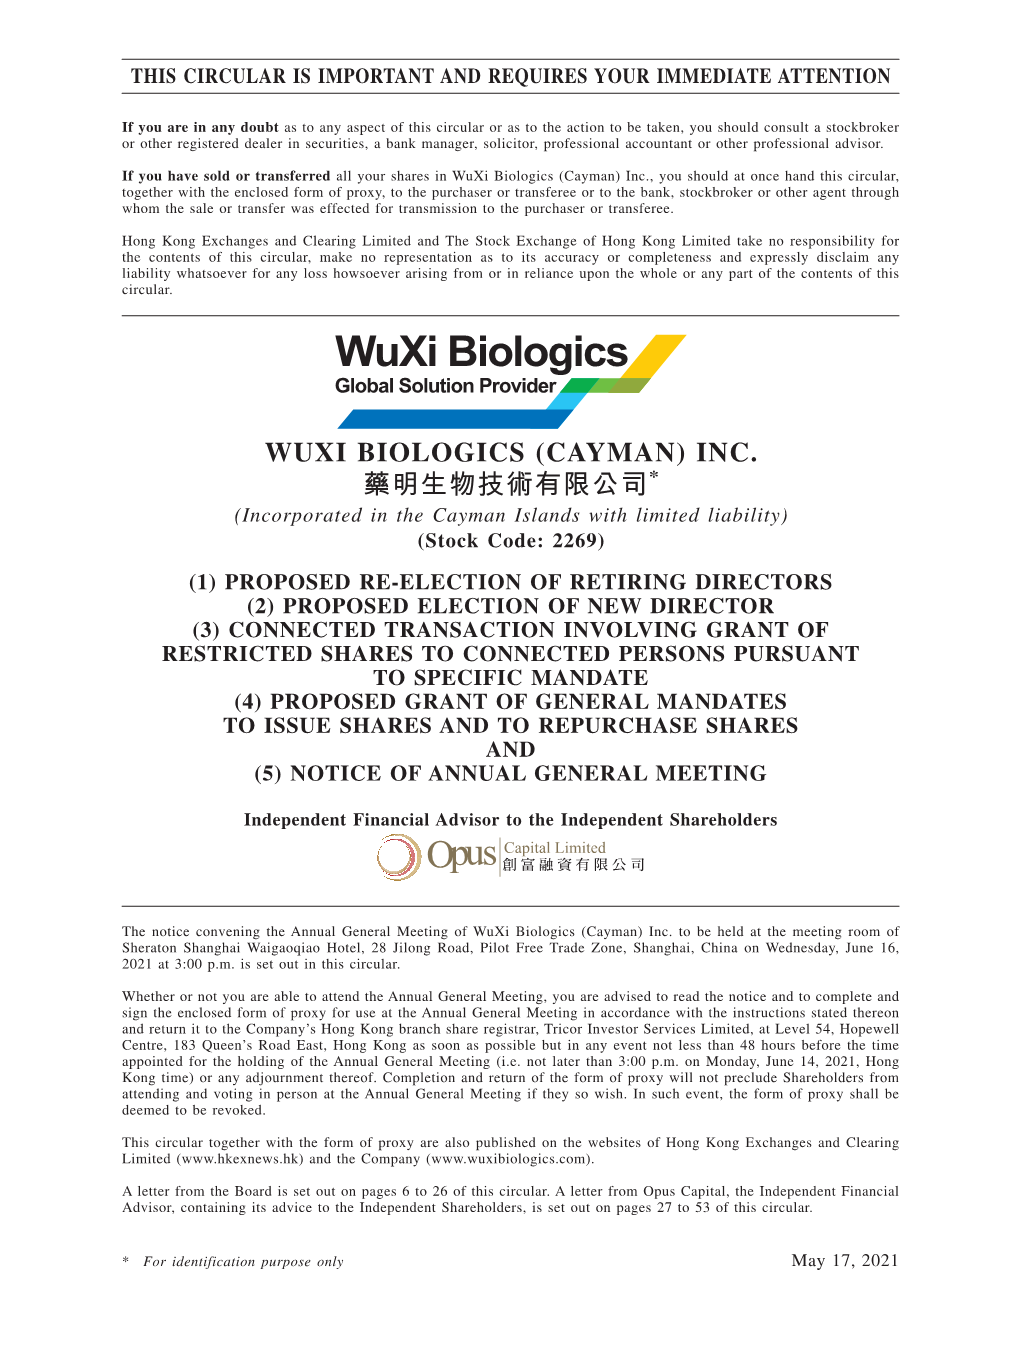 Wuxi Biologics (Cayman) Inc. 藥明生物技術有限公司*